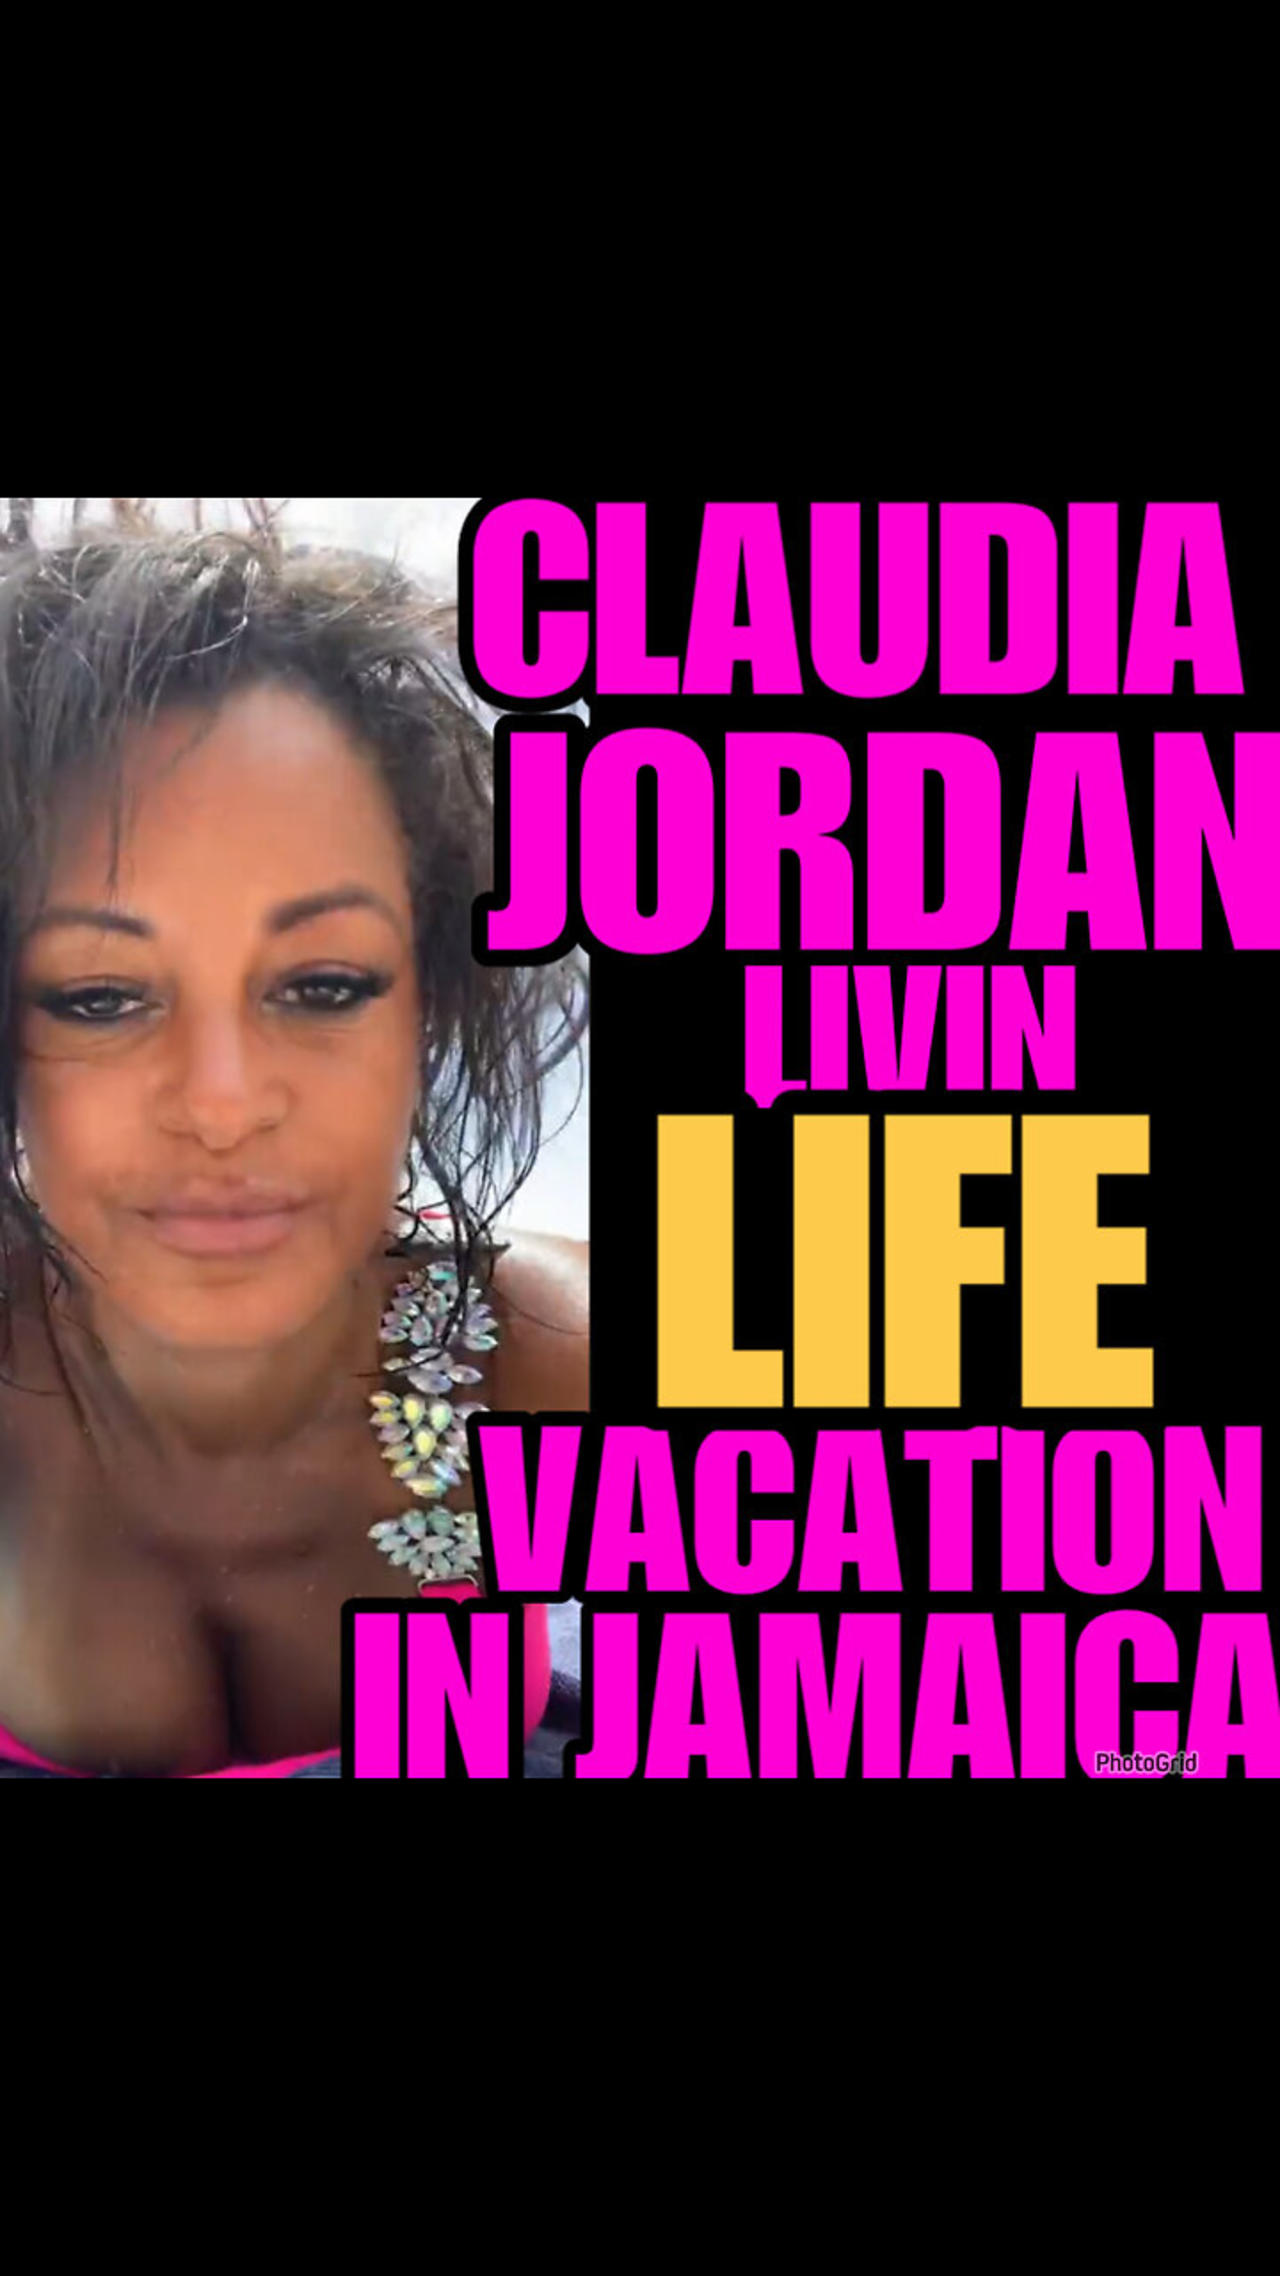 Claudia  Jordan and Friends vacation in Jamaica!